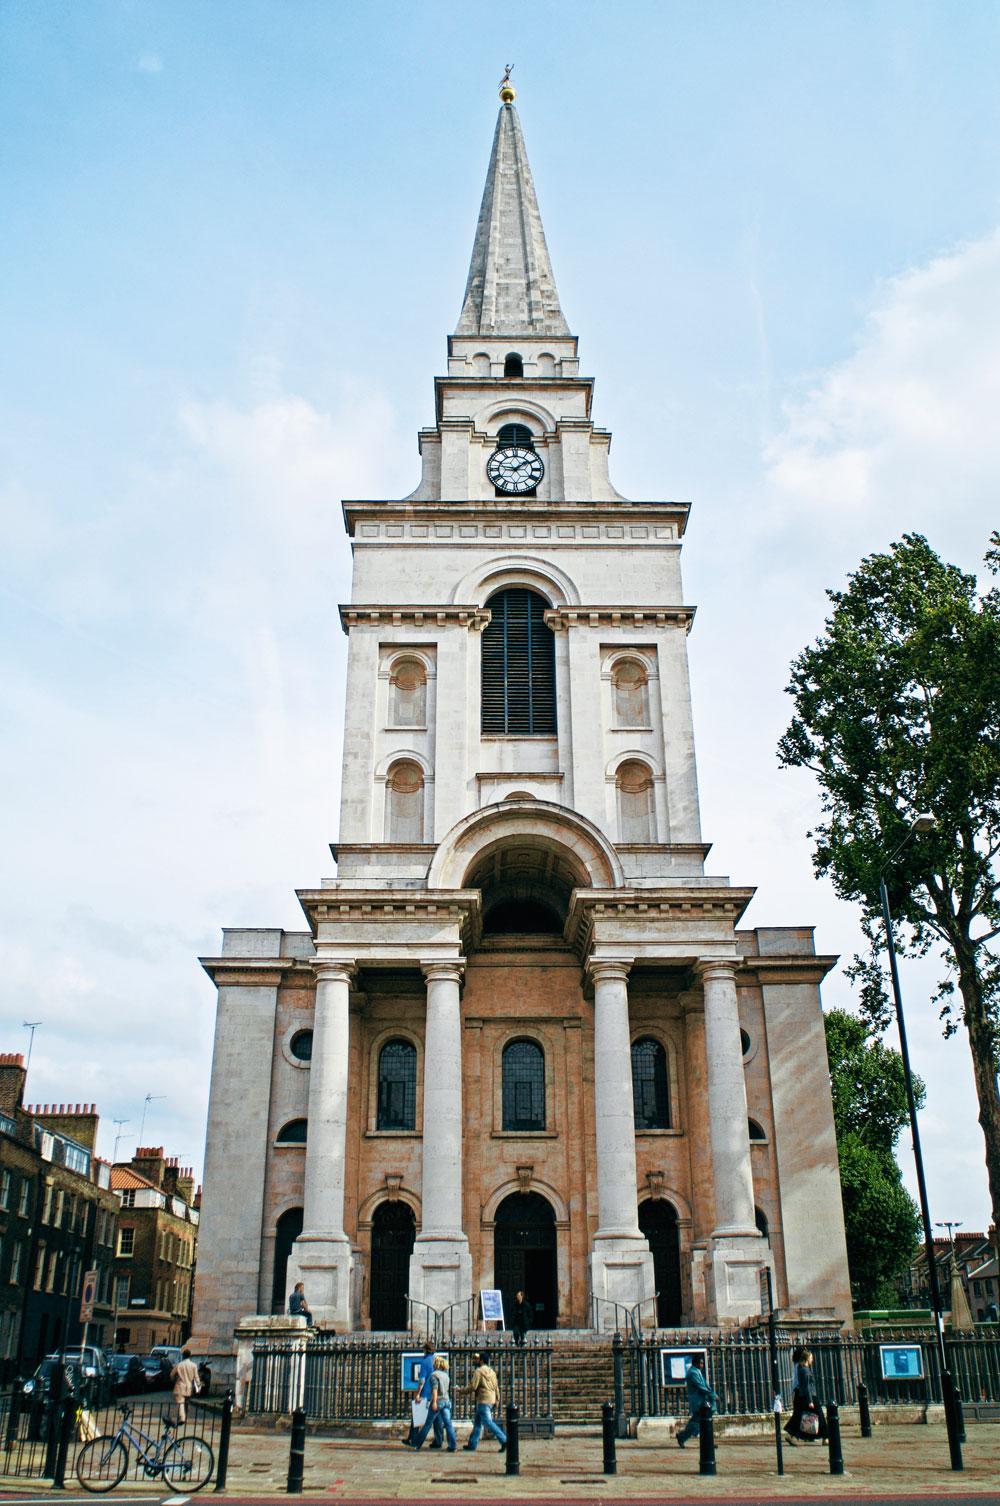 Christ Church Spitalfields de Nicholas Hawksmoor